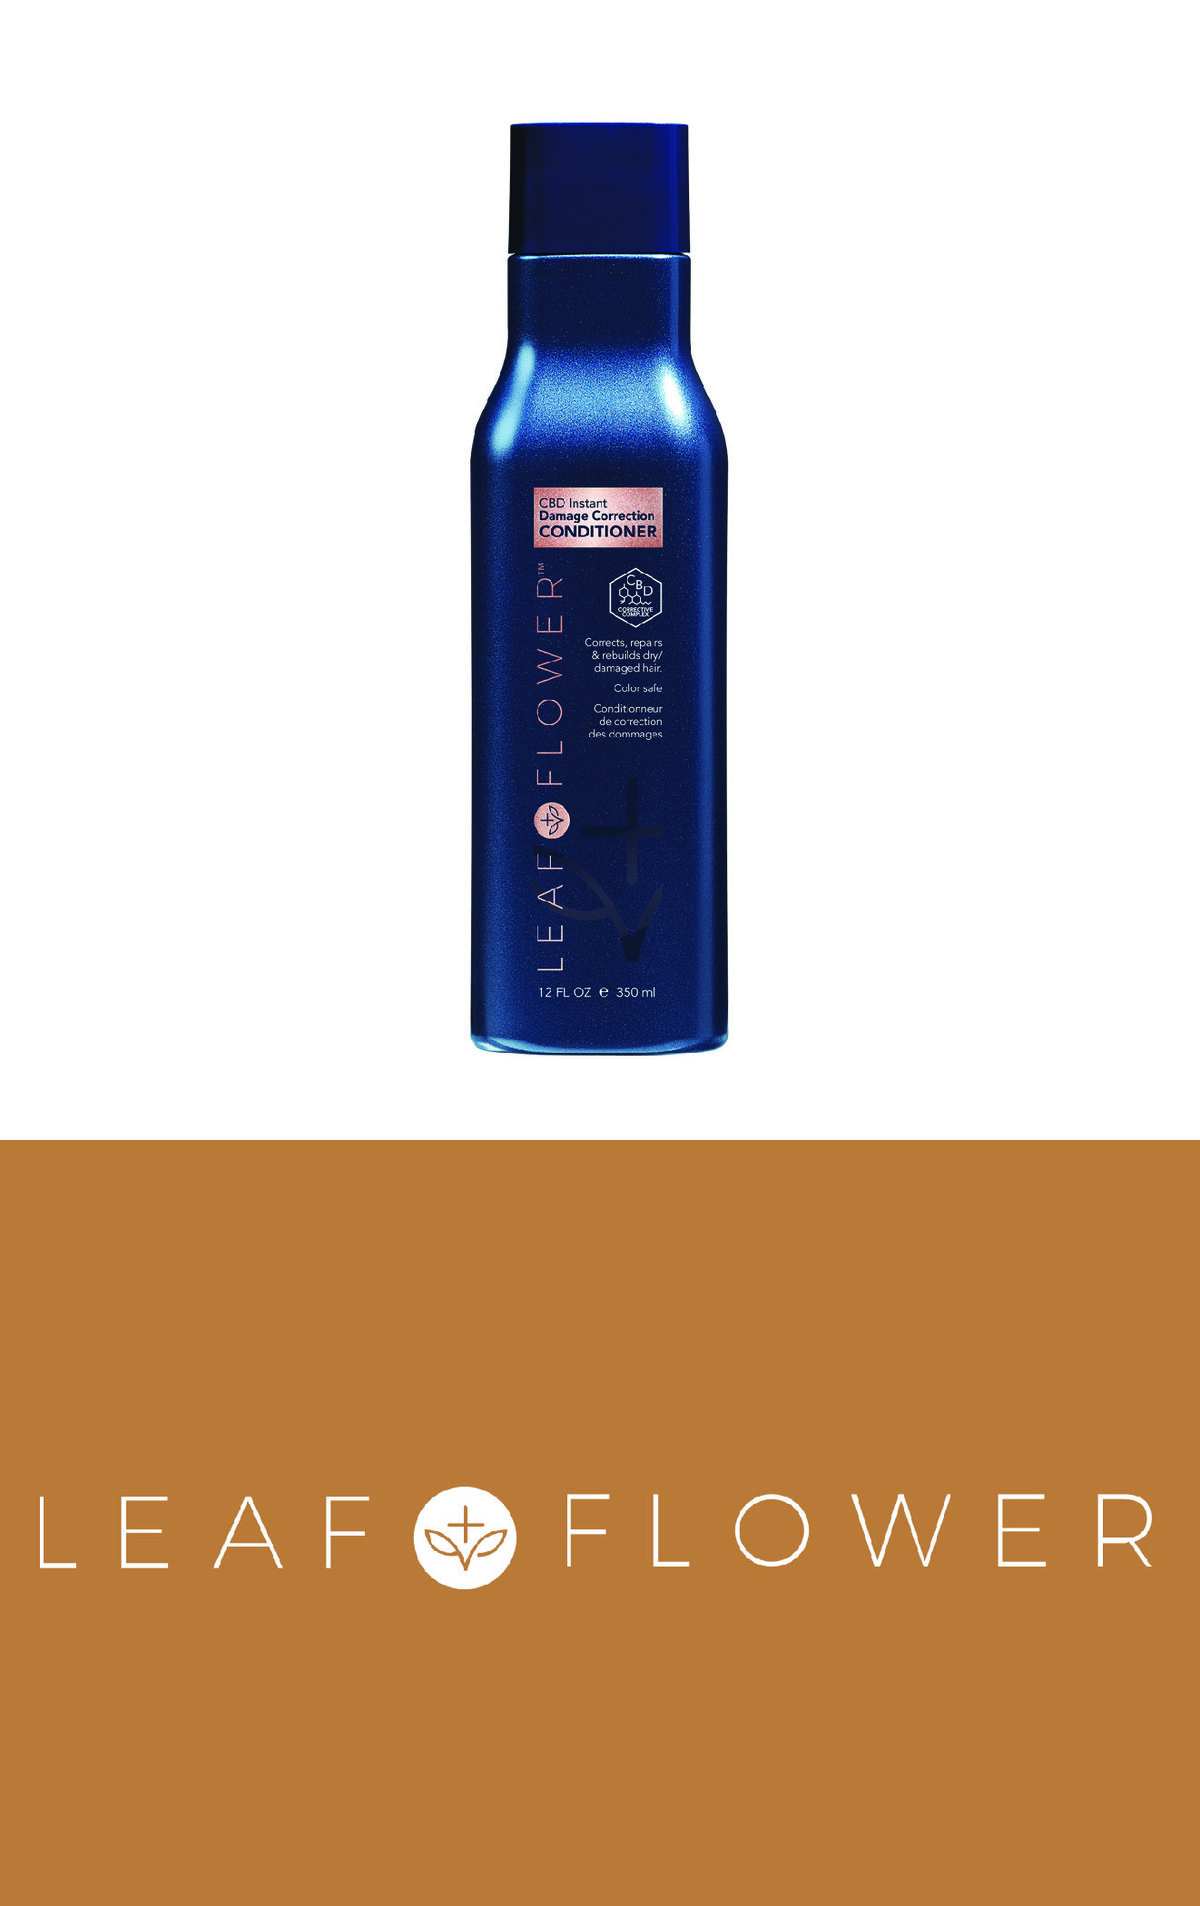 LeafFlower-01